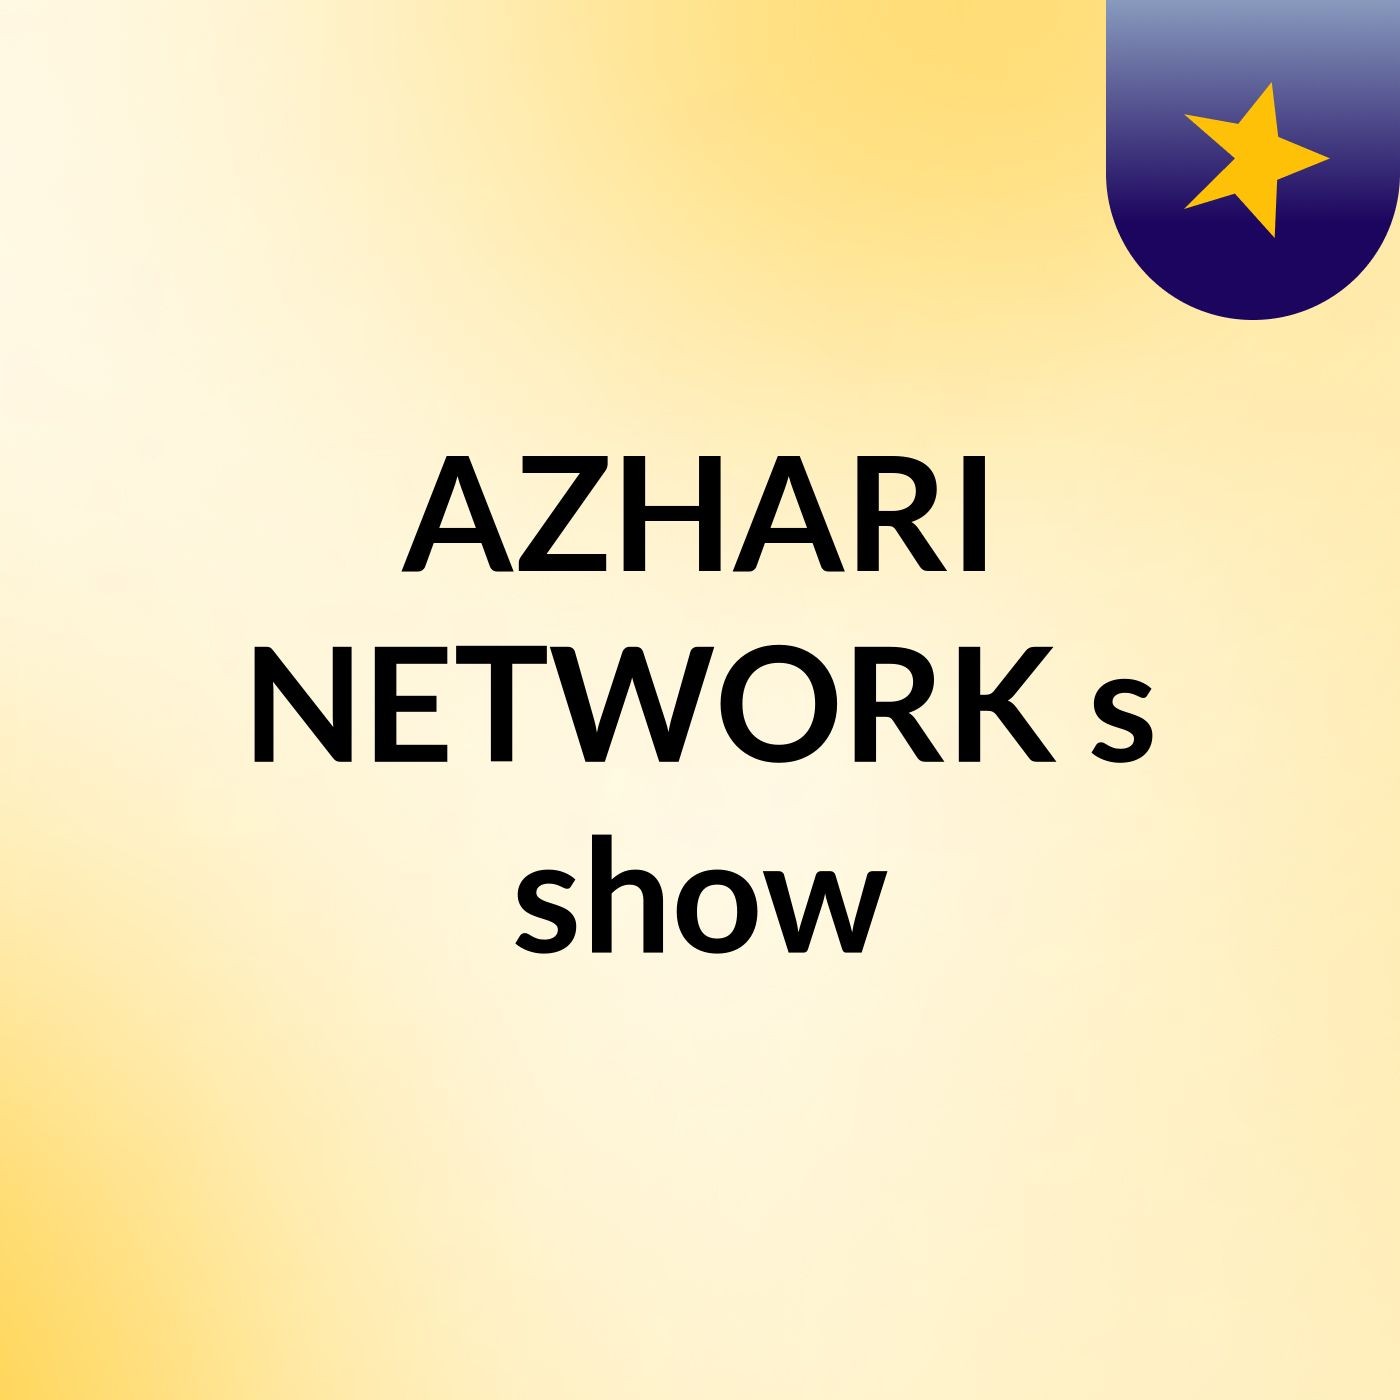 AZHARI NETWORK's show